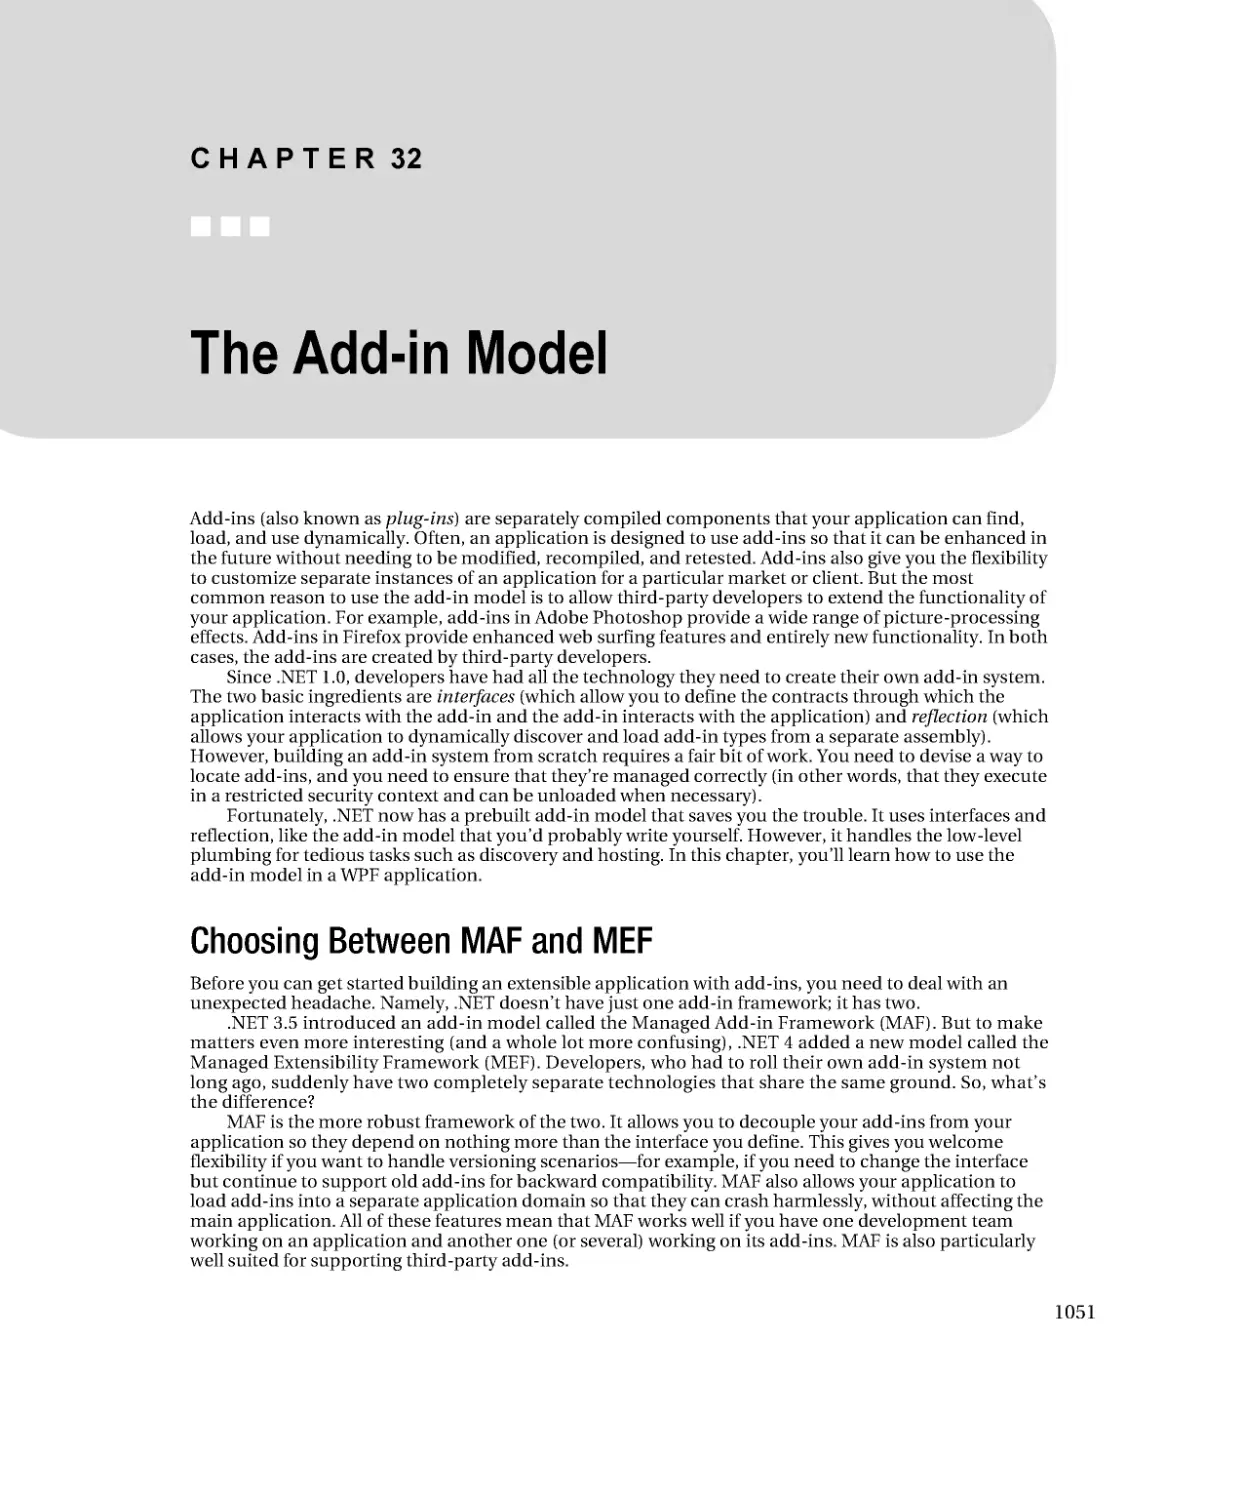 The Add-in Model